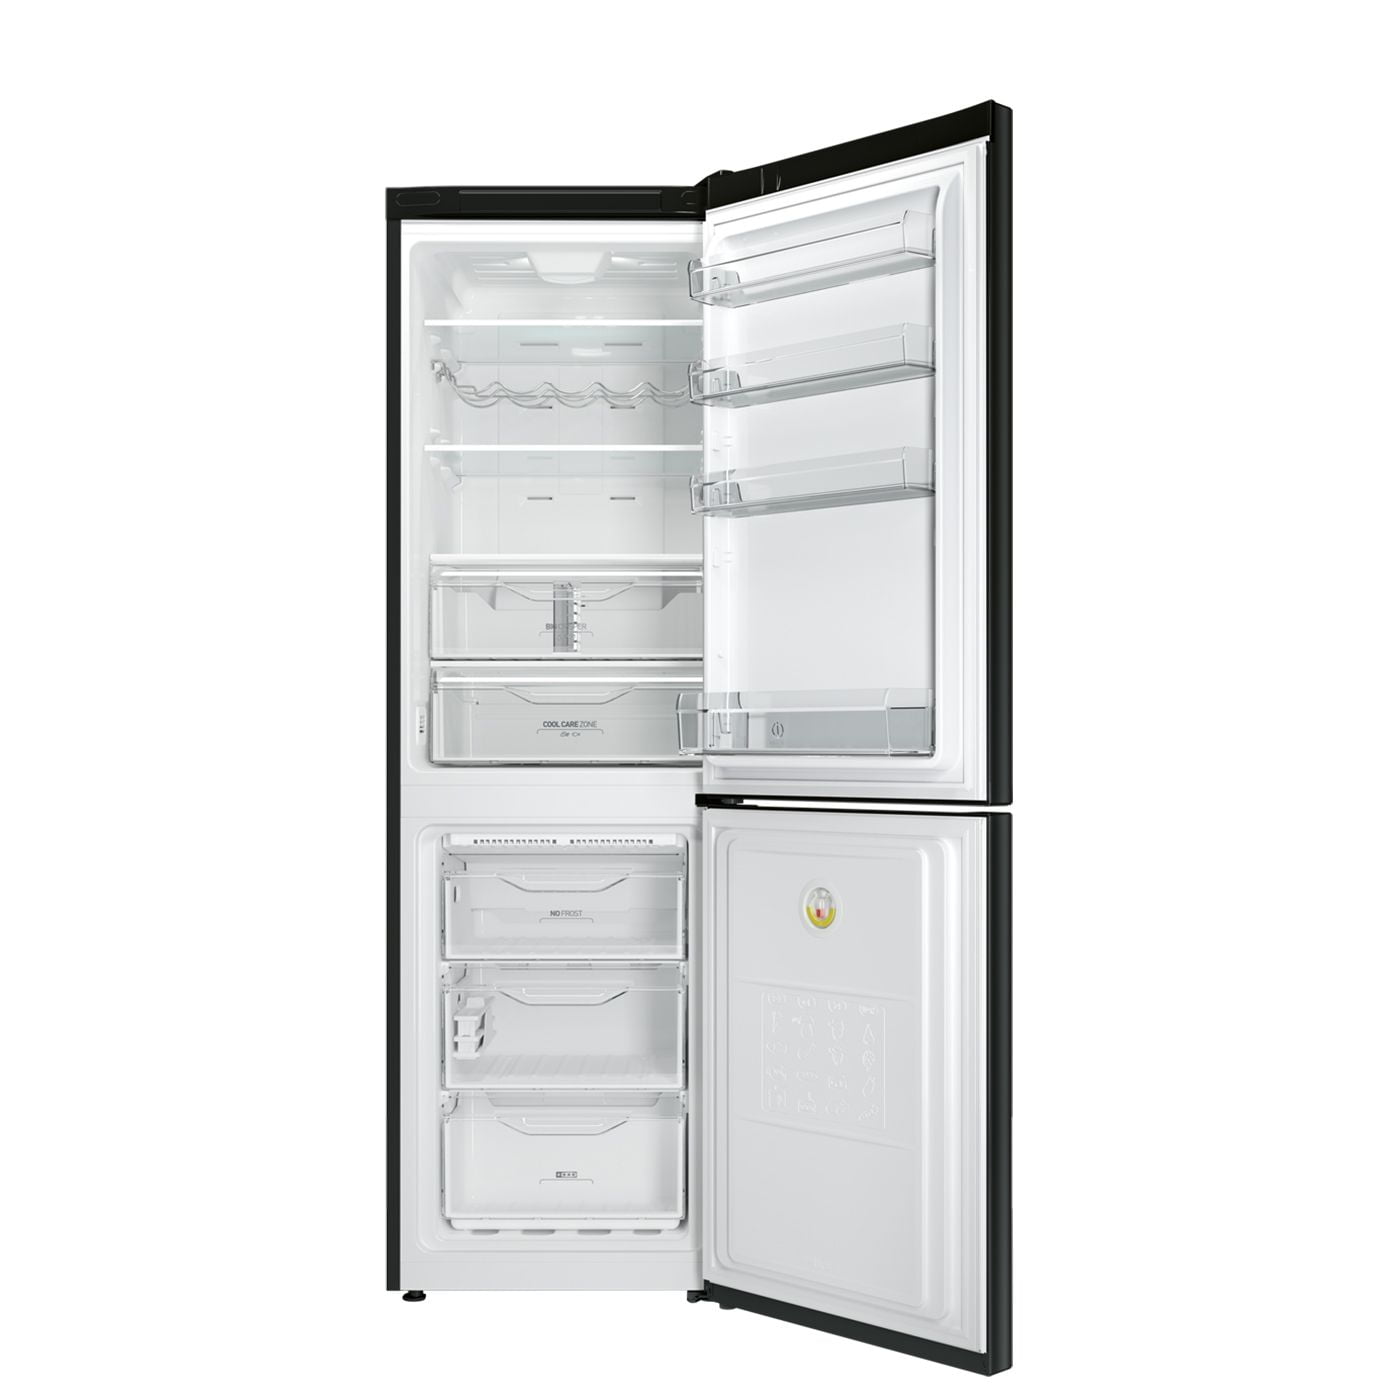 Двухкамерный холодильник морозильник. Холодильник Индезит двухкамерный 2м. Холодильник Индезит двухкамерный ноу Фрост.